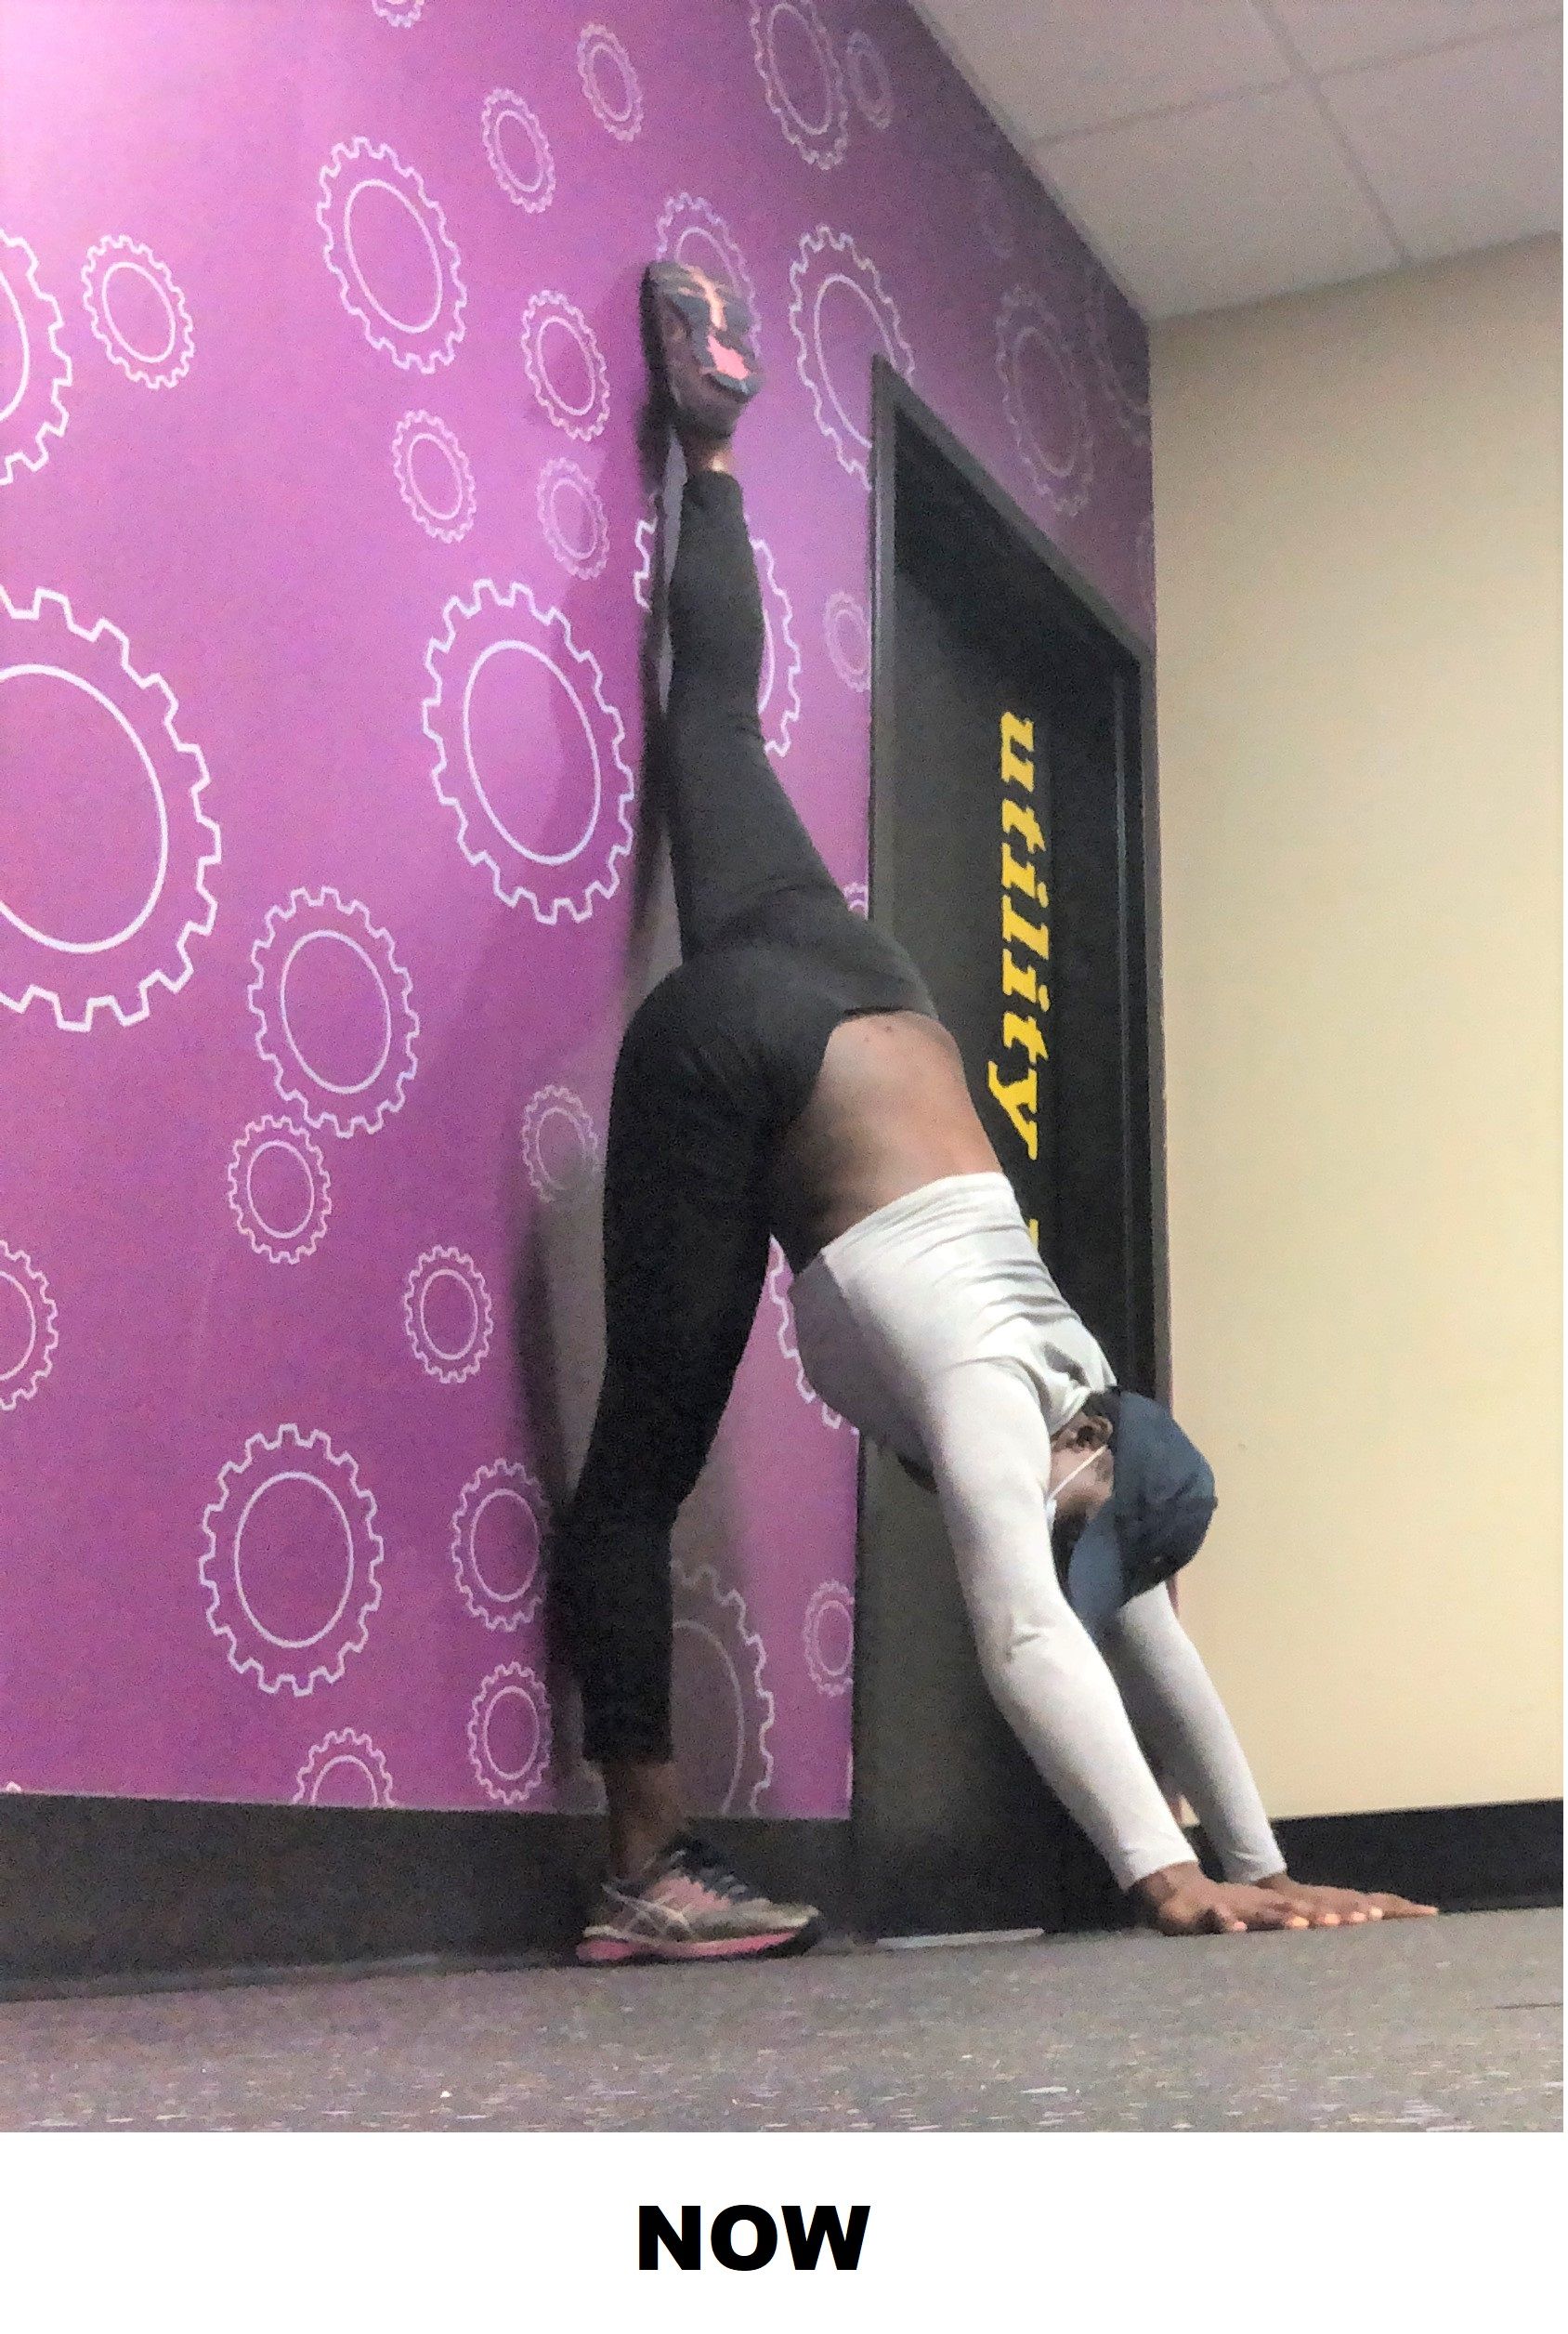 Increase flexibility testimonial splits up the wall 